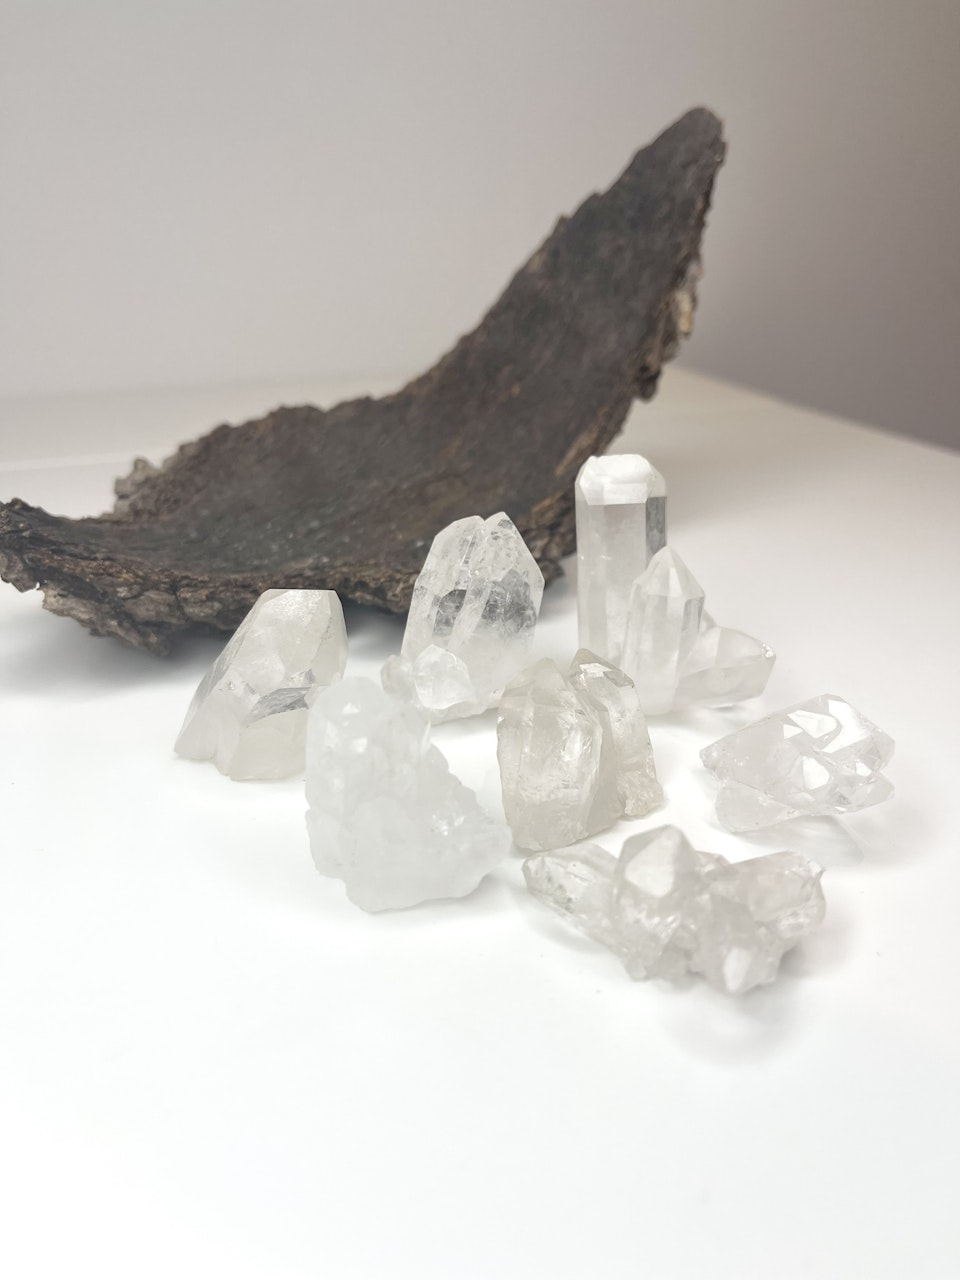 Bergkristall, clear quartz, naturliga kluster